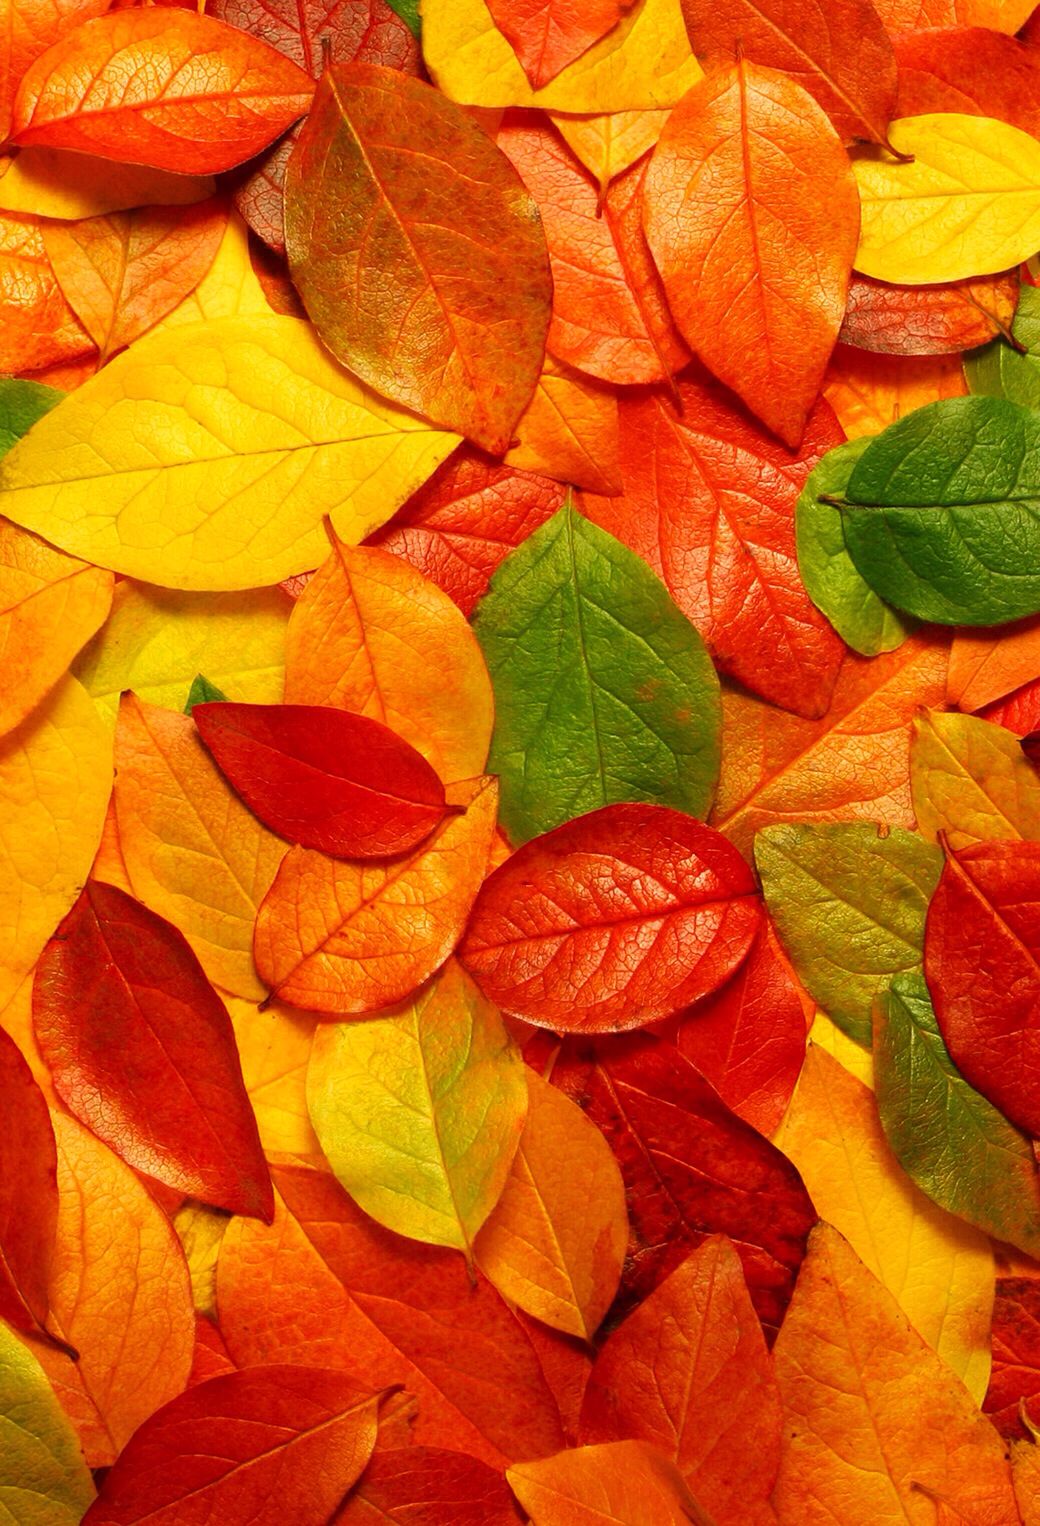 Colorful Autumn Wallpaper Design Ledger. Autumn leaves wallpaper, Autumn leaves background, Autumn scenes